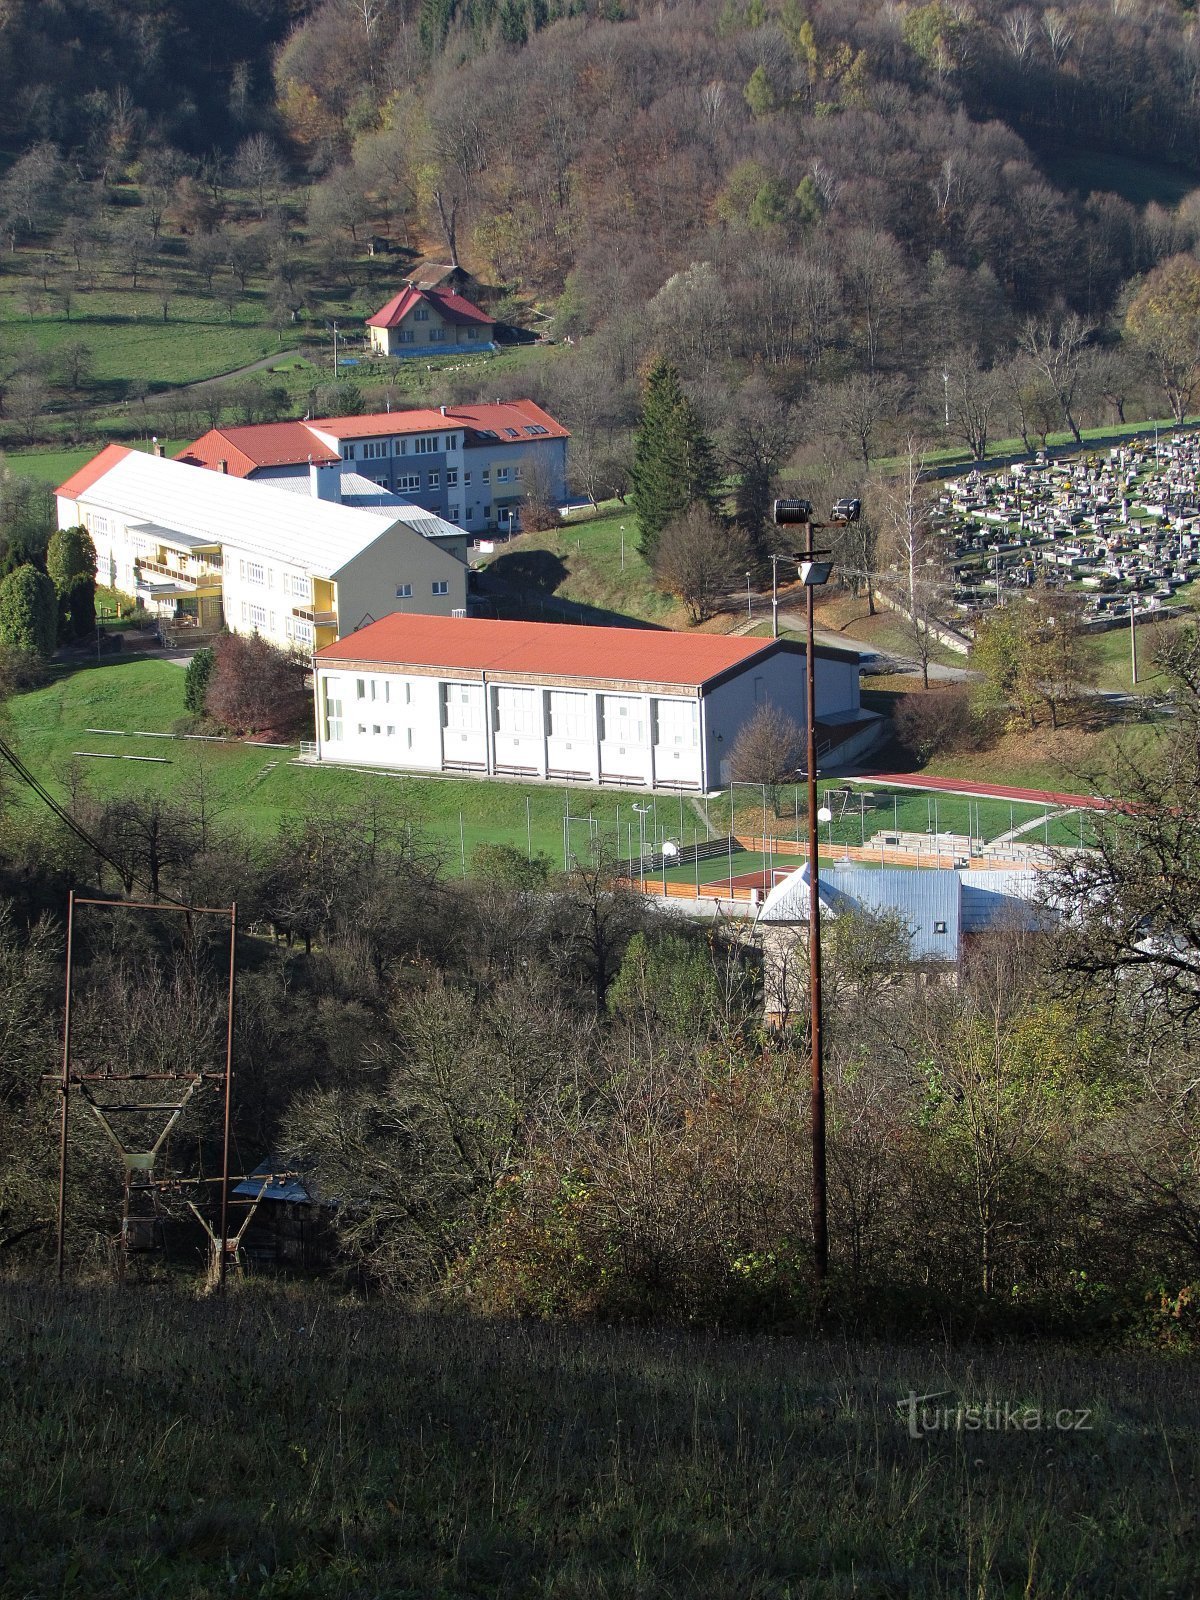 Kašava elementary school, kindergarten and cemetery